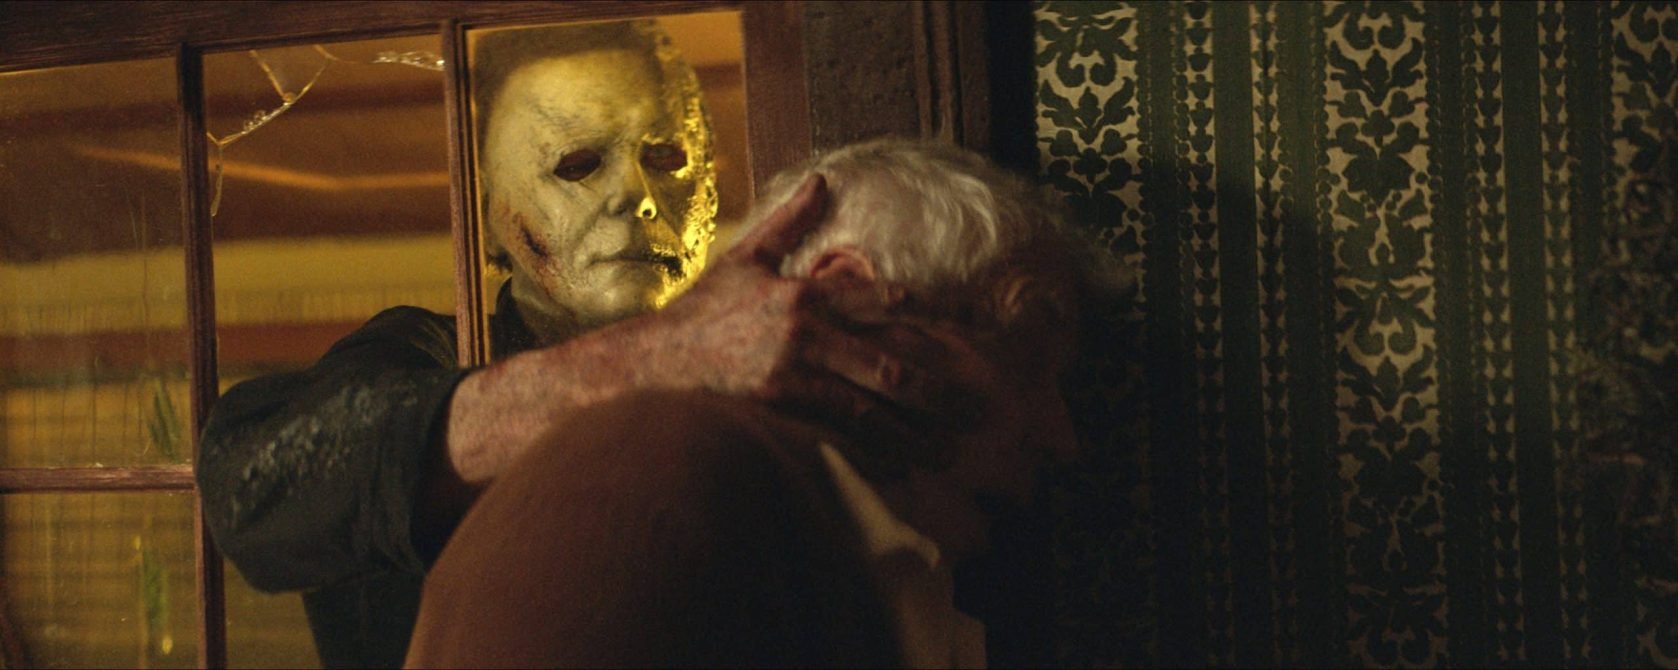 William Shatner Halloween mask